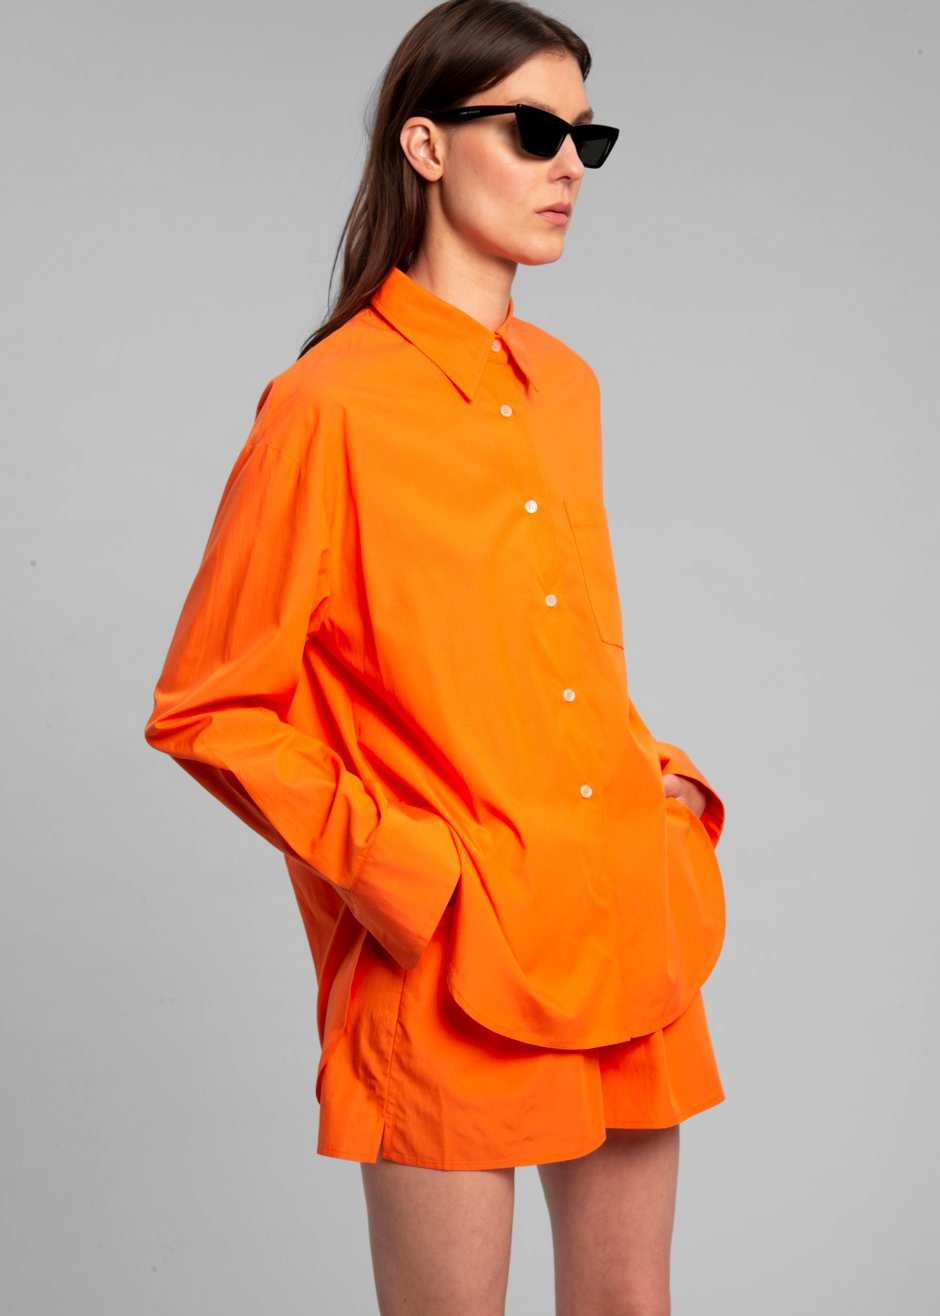 Lui Cotton Shirt - Tangerine